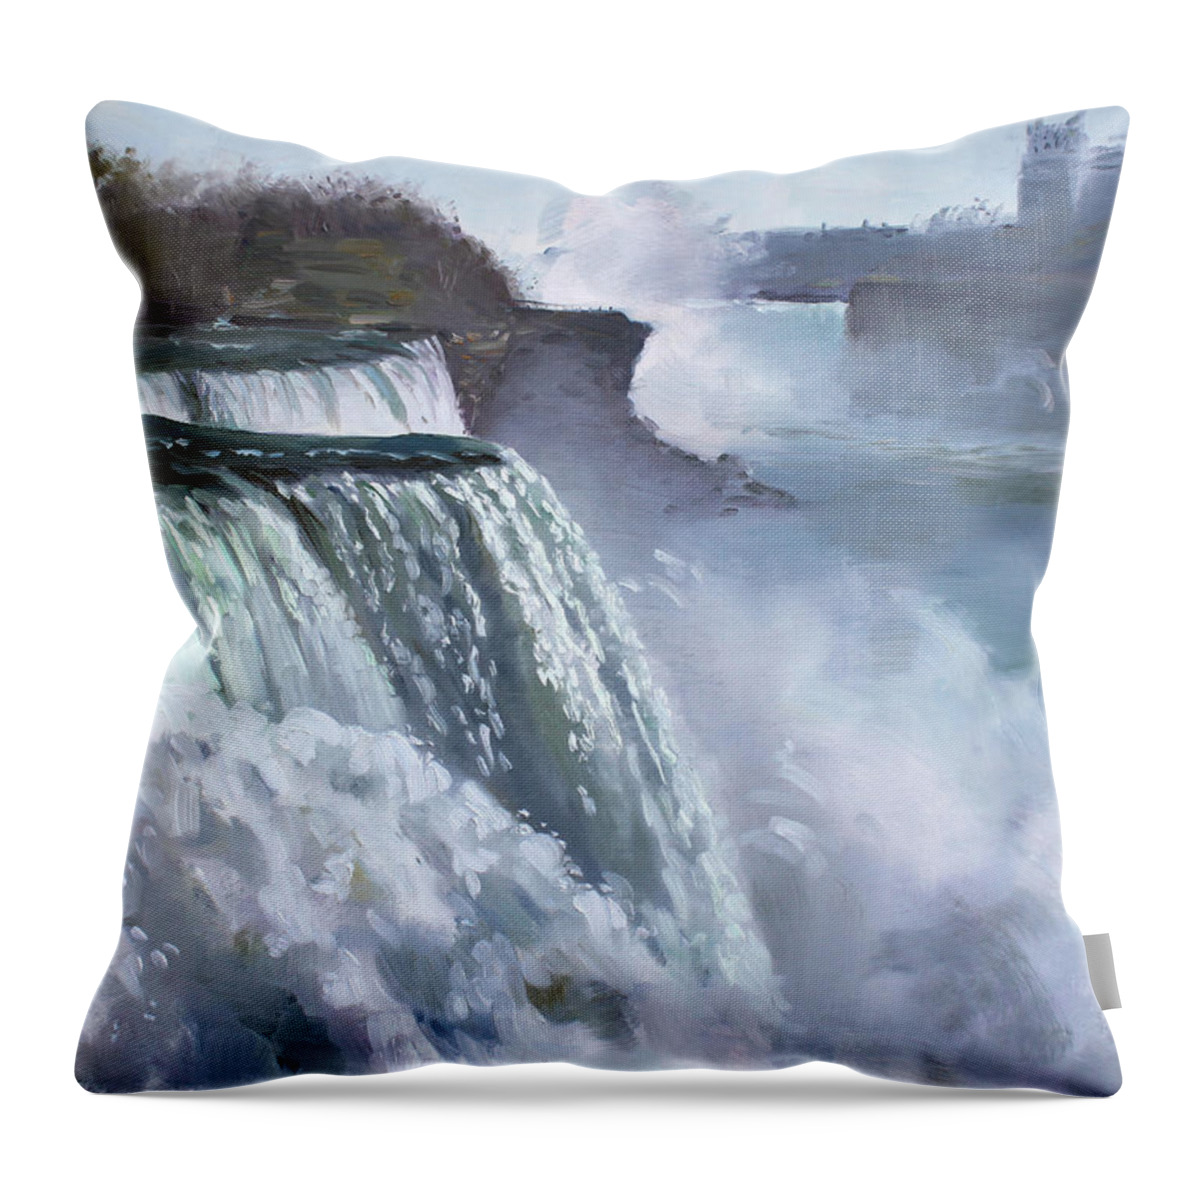 Niagara Falls Throw Pillow featuring the painting Niagara American Falls by Ylli Haruni